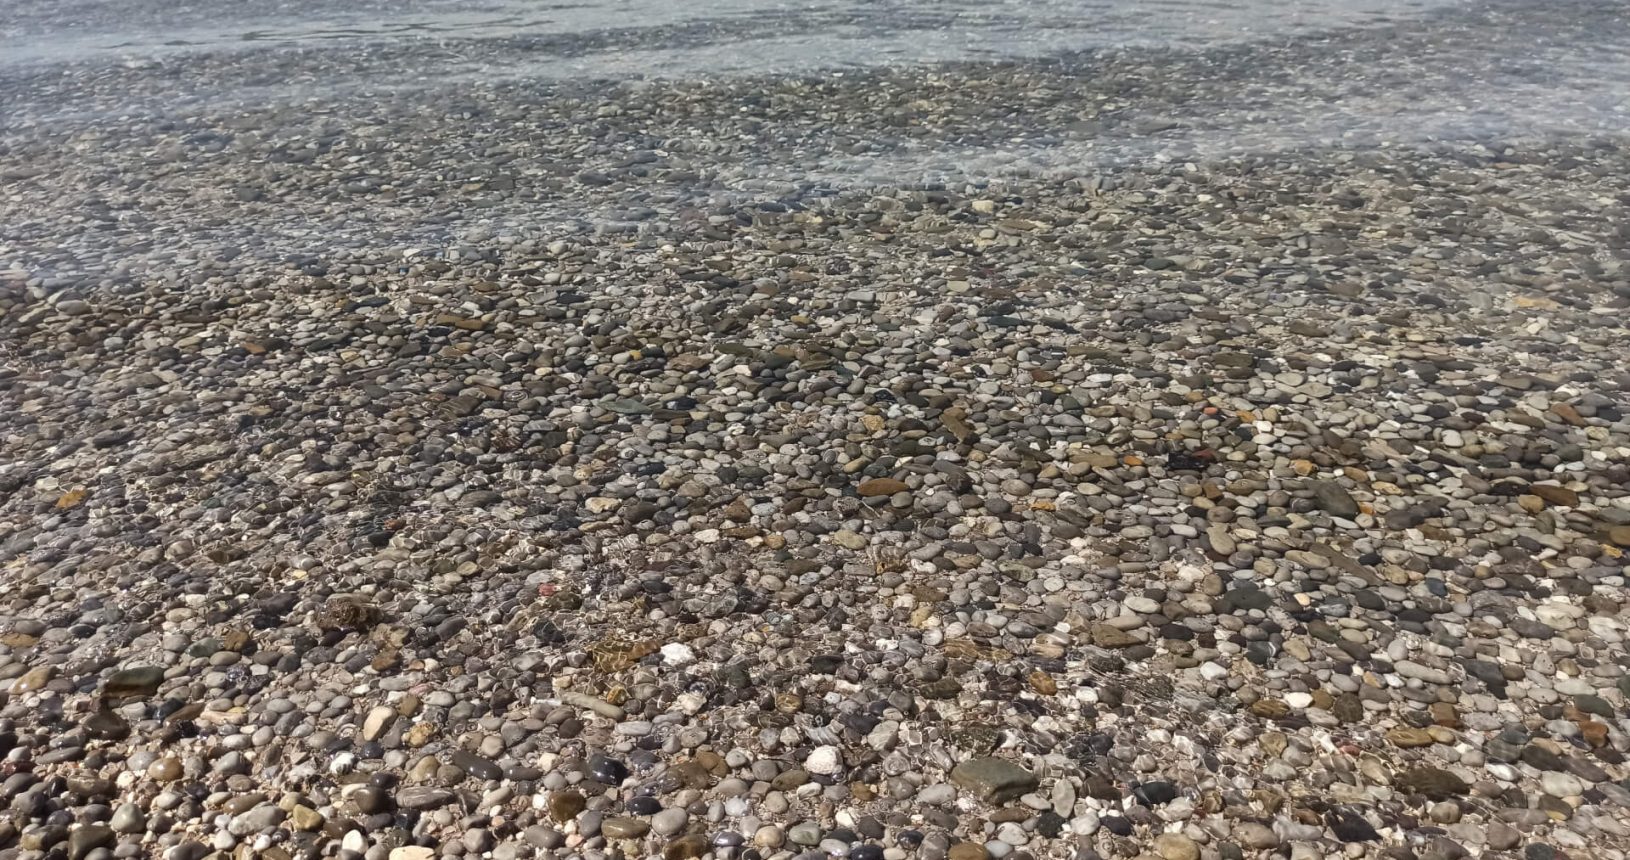 Very clean and transparent water. Kalardovo beach